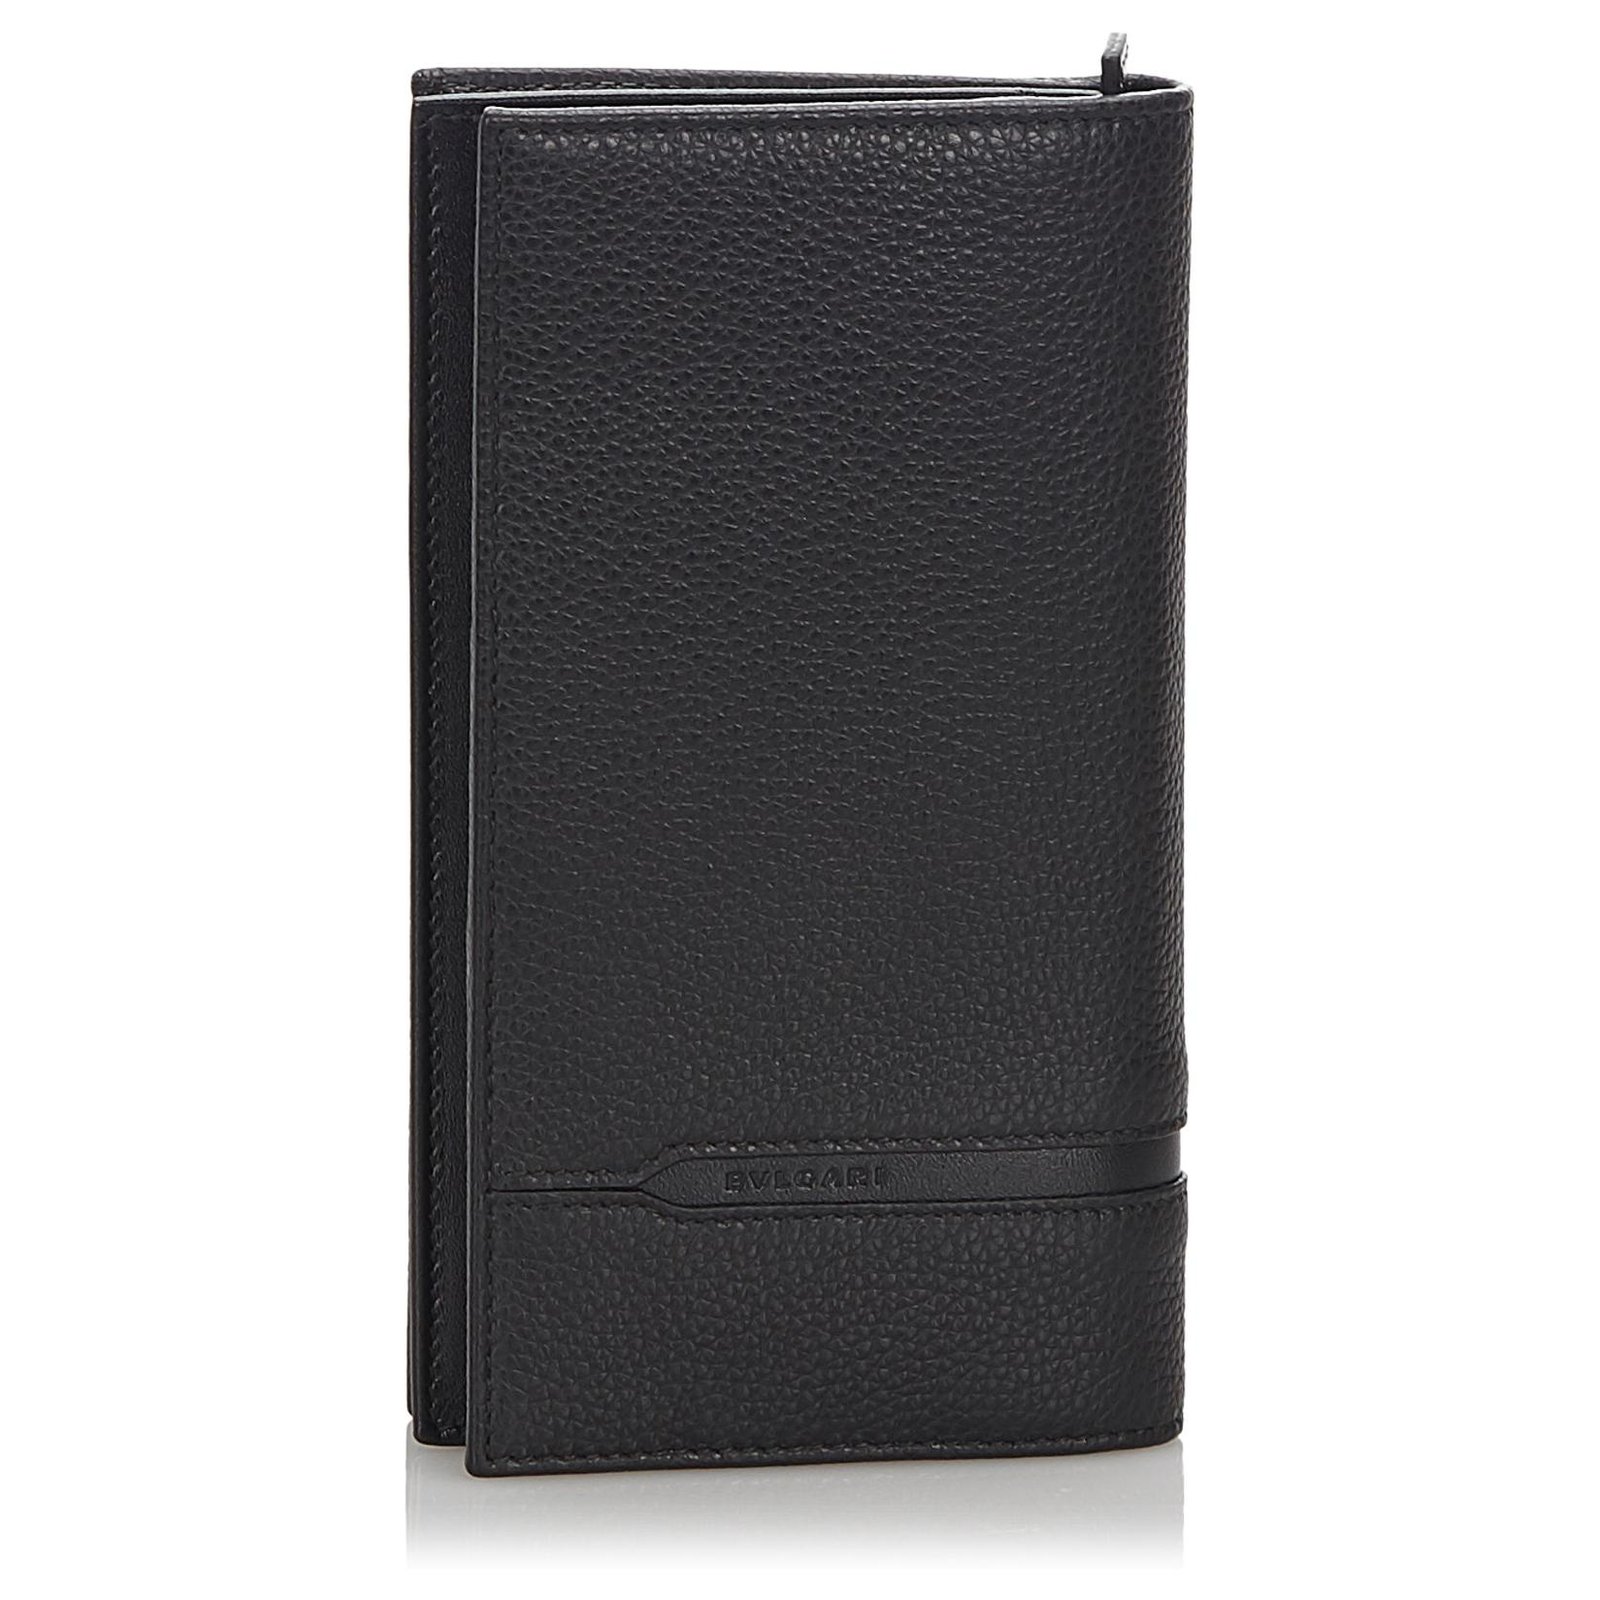 Black Leather Wallet Purses, wallets 